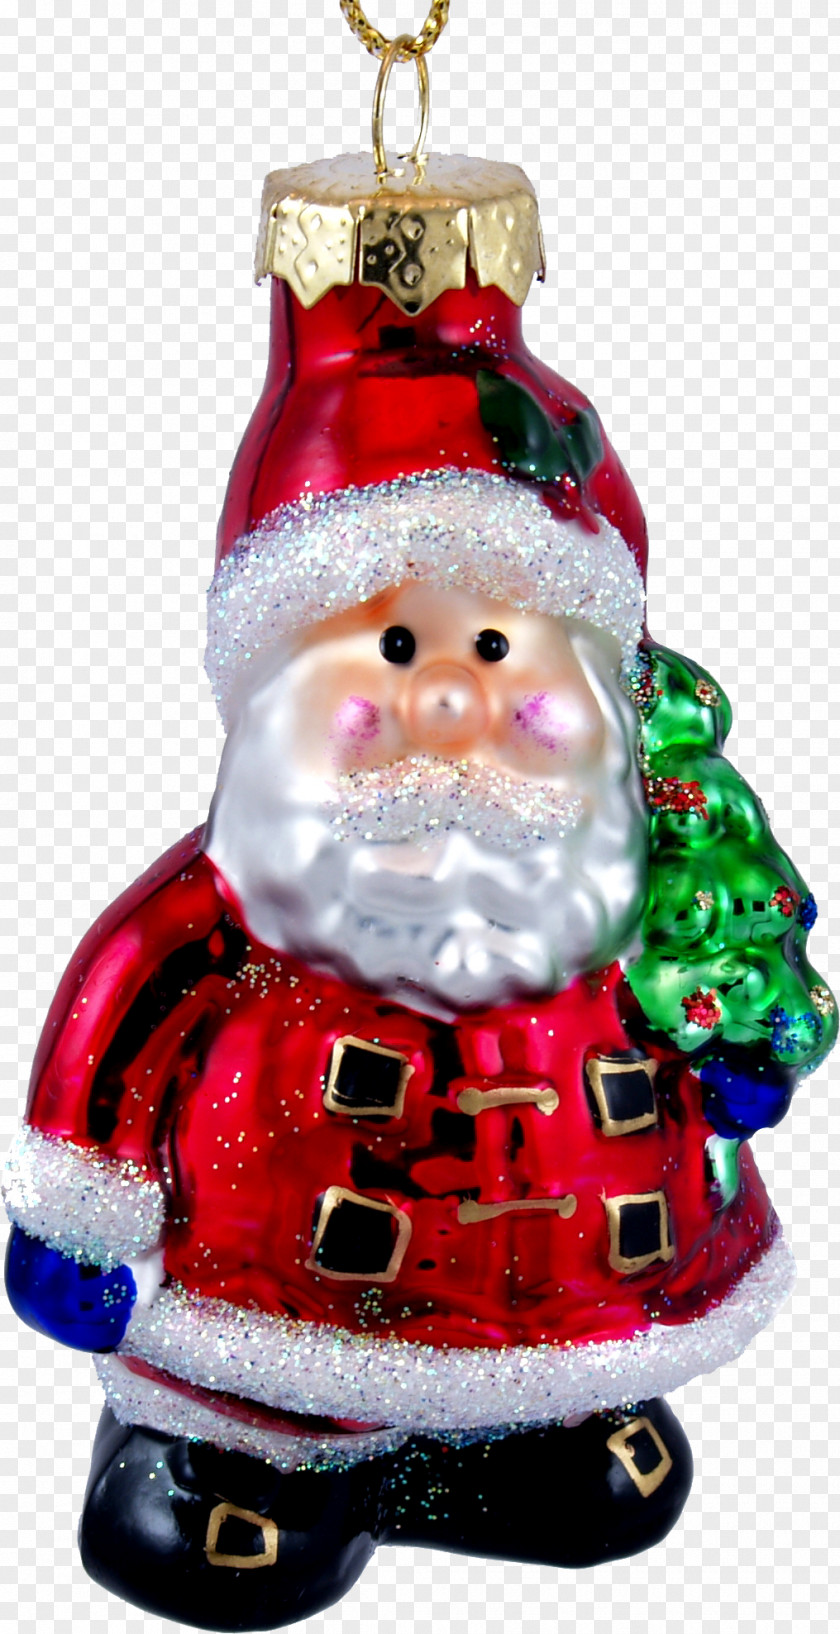 Snowman Santa Claus Christmas Ornament Ded Moroz New Year PNG